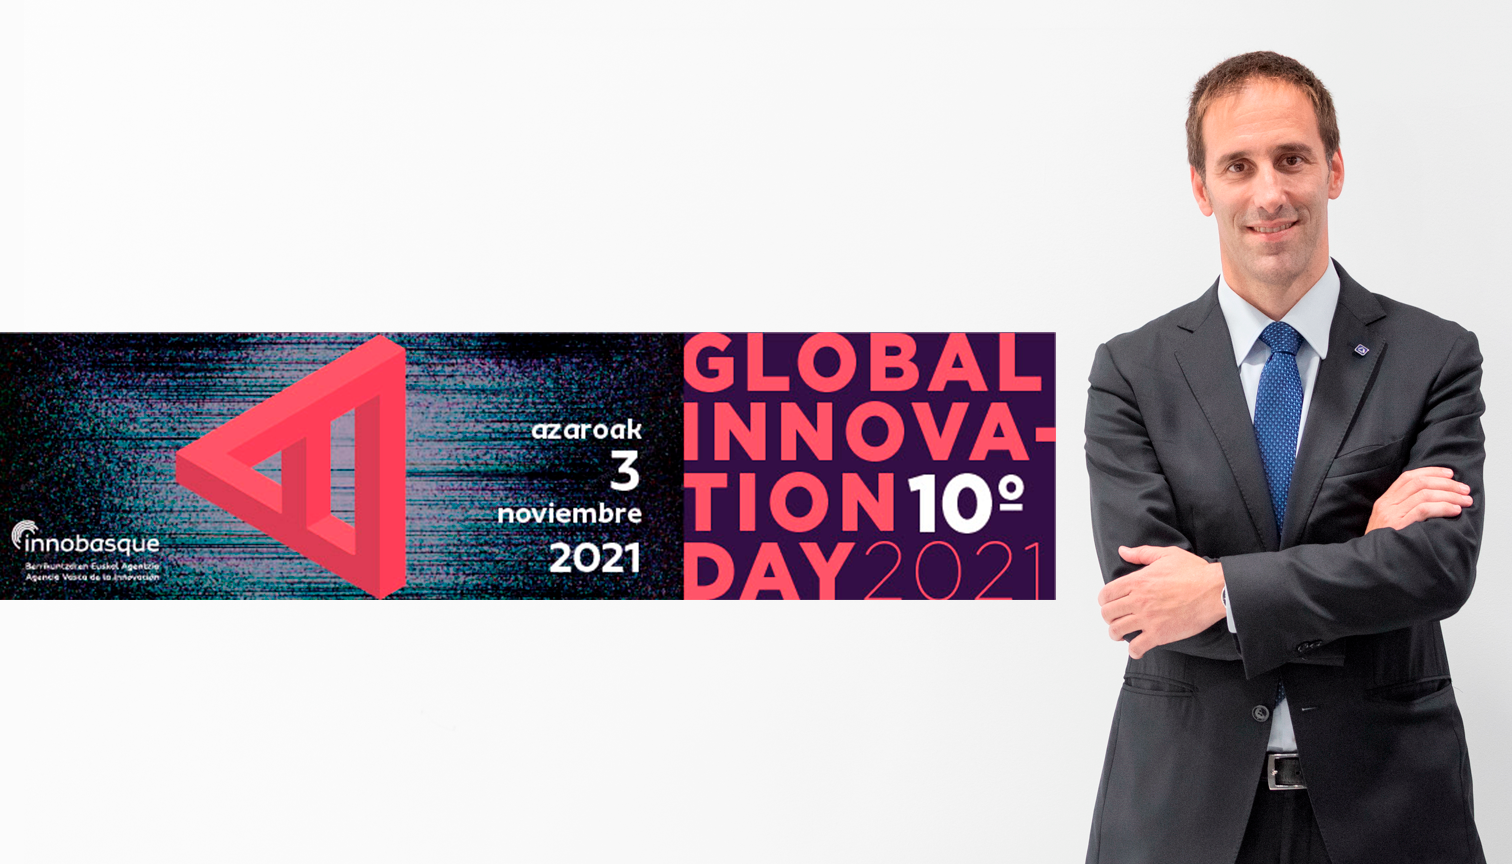 Danobatgroup analyses future technological trends on Global Innovation Day 2021